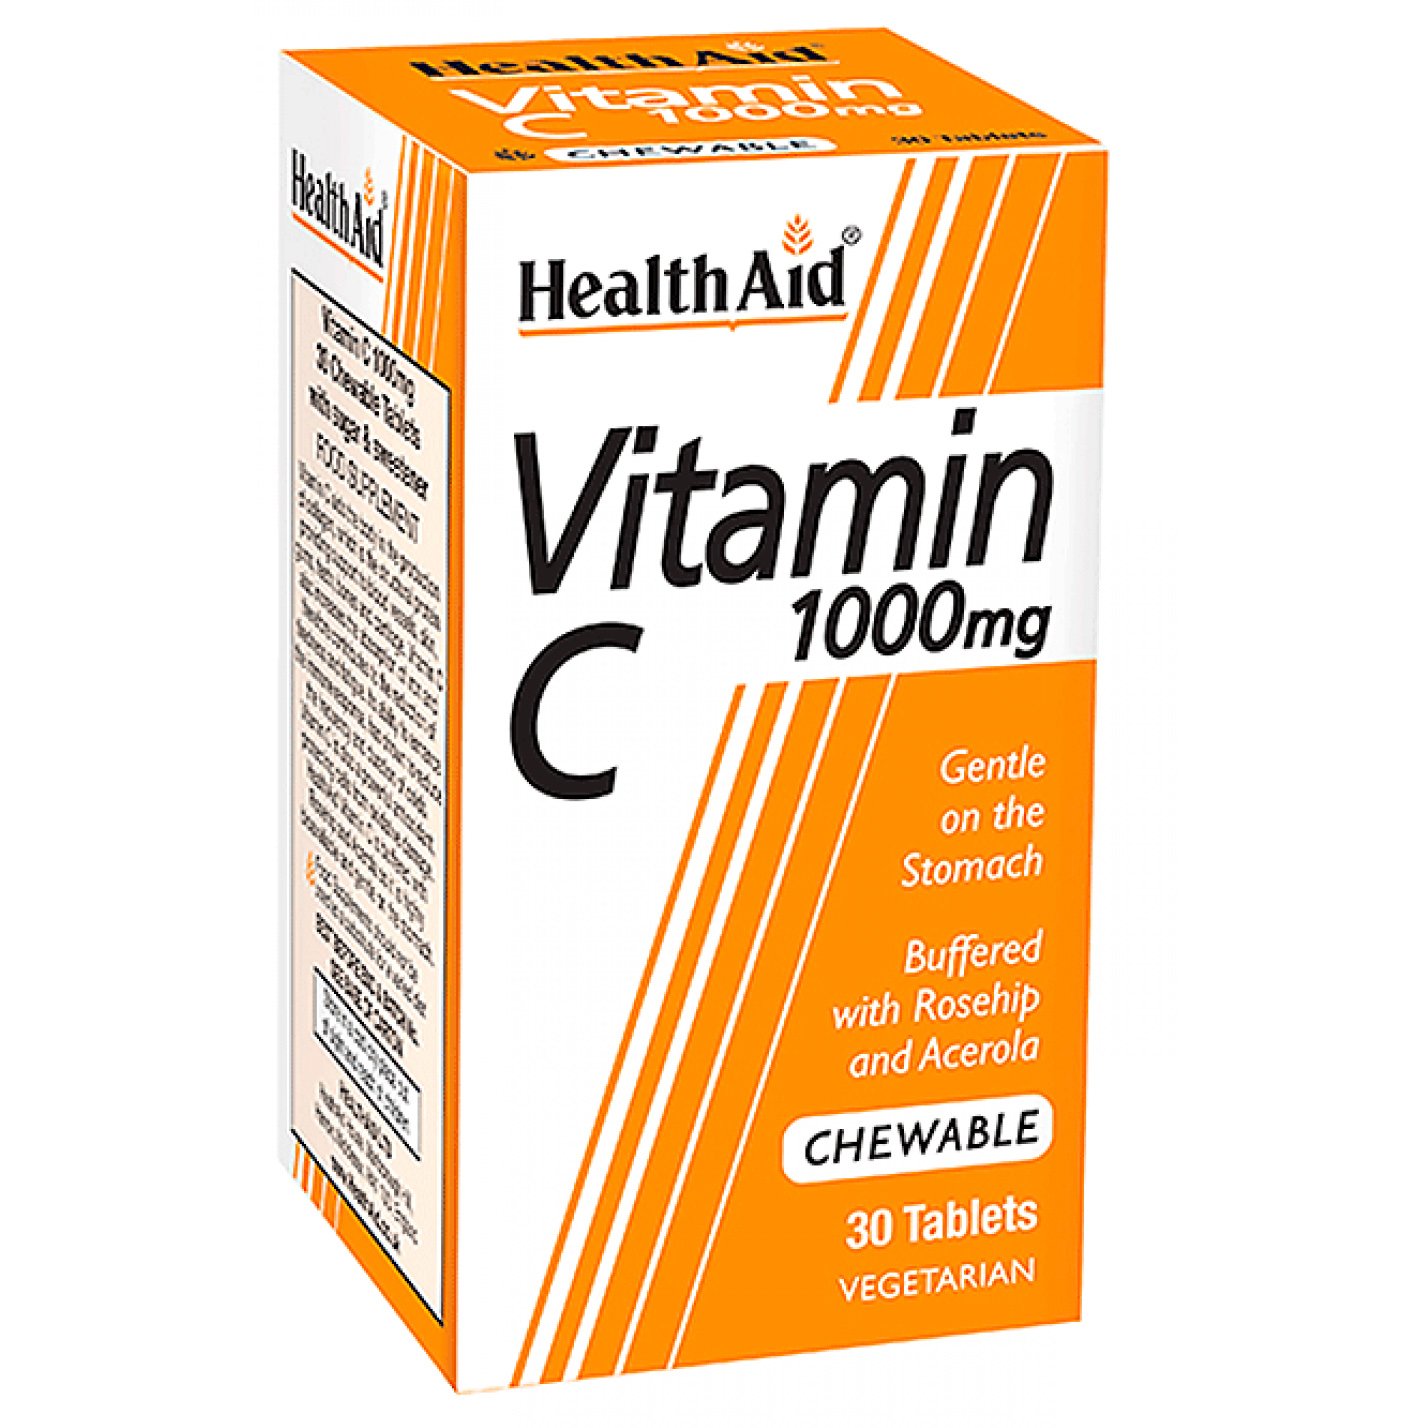 Health Aid Vitamin C 1000mg Συμπλήρωμα Διατροφής, Μασώμενο, με Βιταμίνης C για Ενίσχυση του Ανοσοποιητικού 30 Chewable Tabs